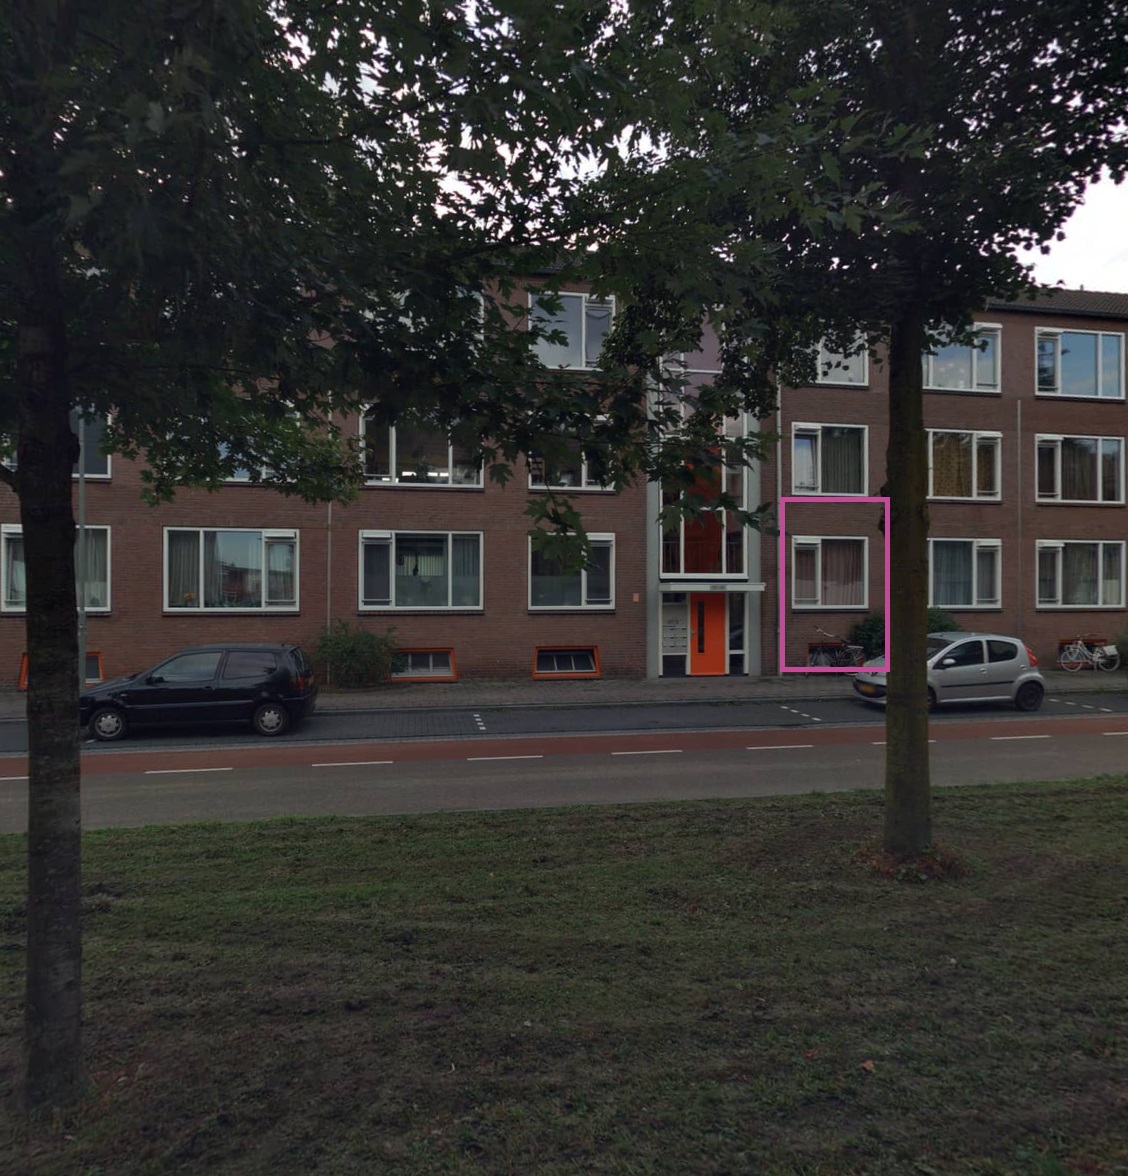 Brugstraat 134, 6591 BH Gennep, Nederland